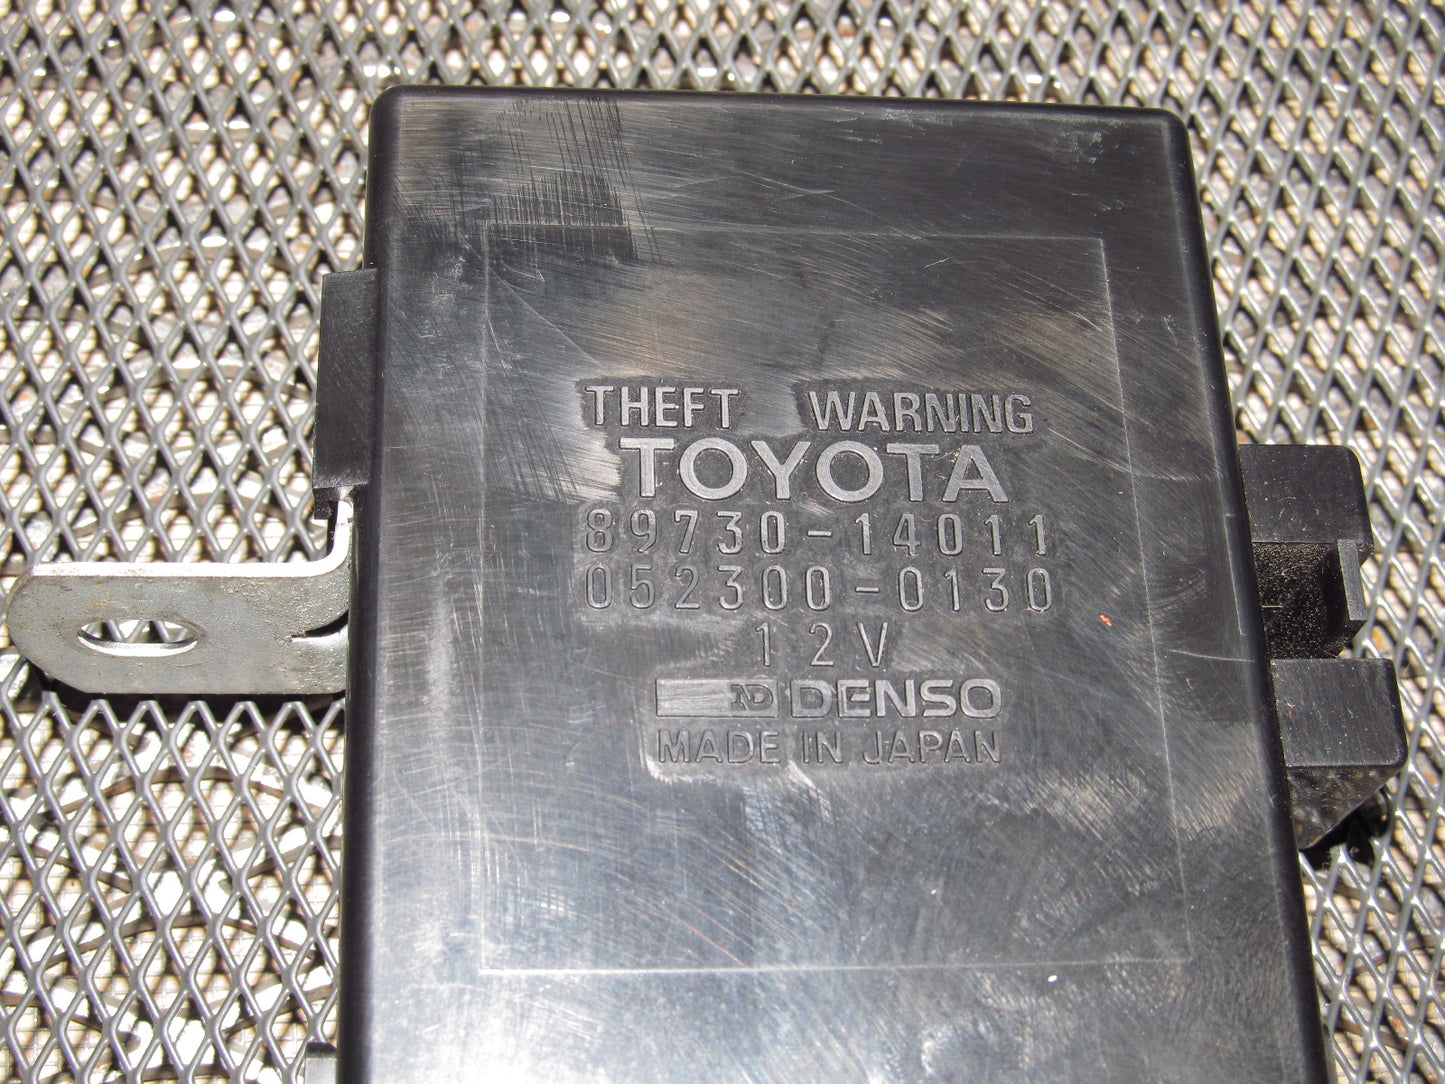 89 90 91 92 Toyota Supra OEM Theft Warning Unit - 89730-14011